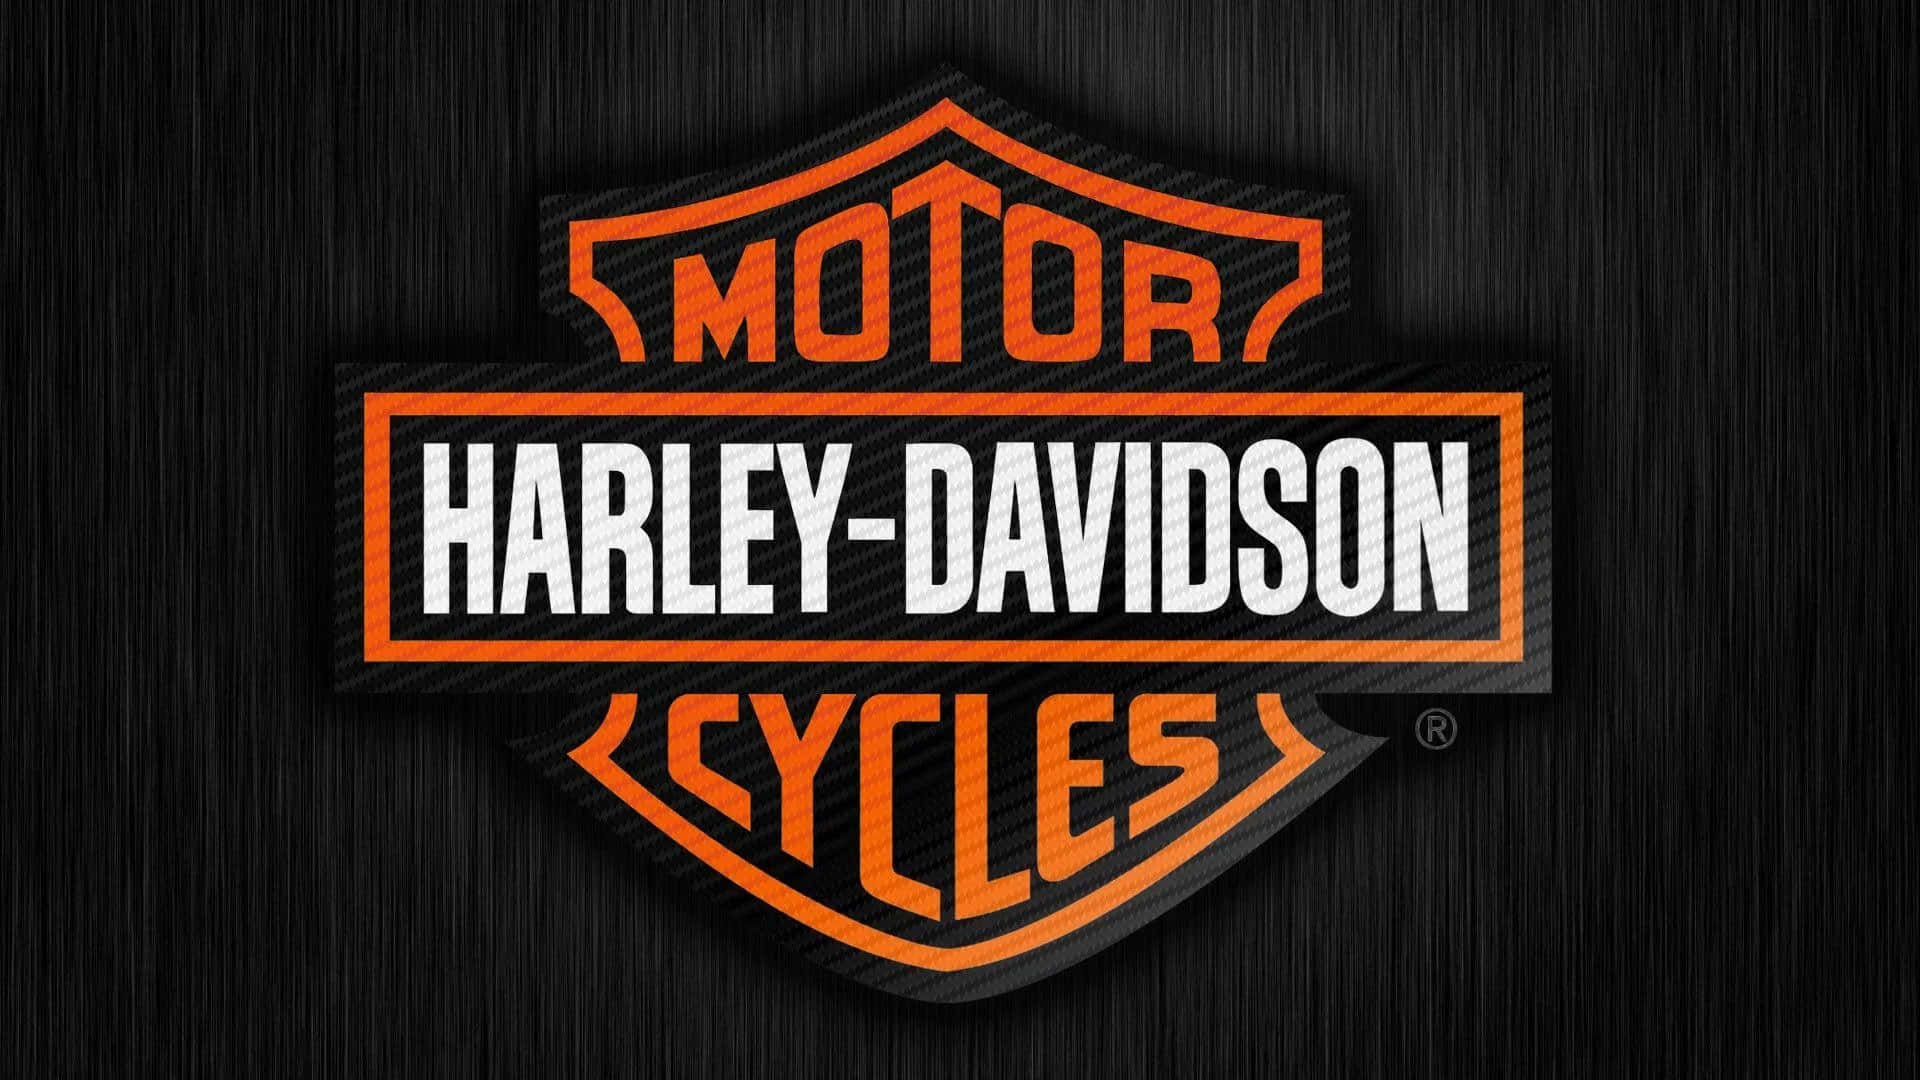 Harley Davidson Motorcycle Emblem Background